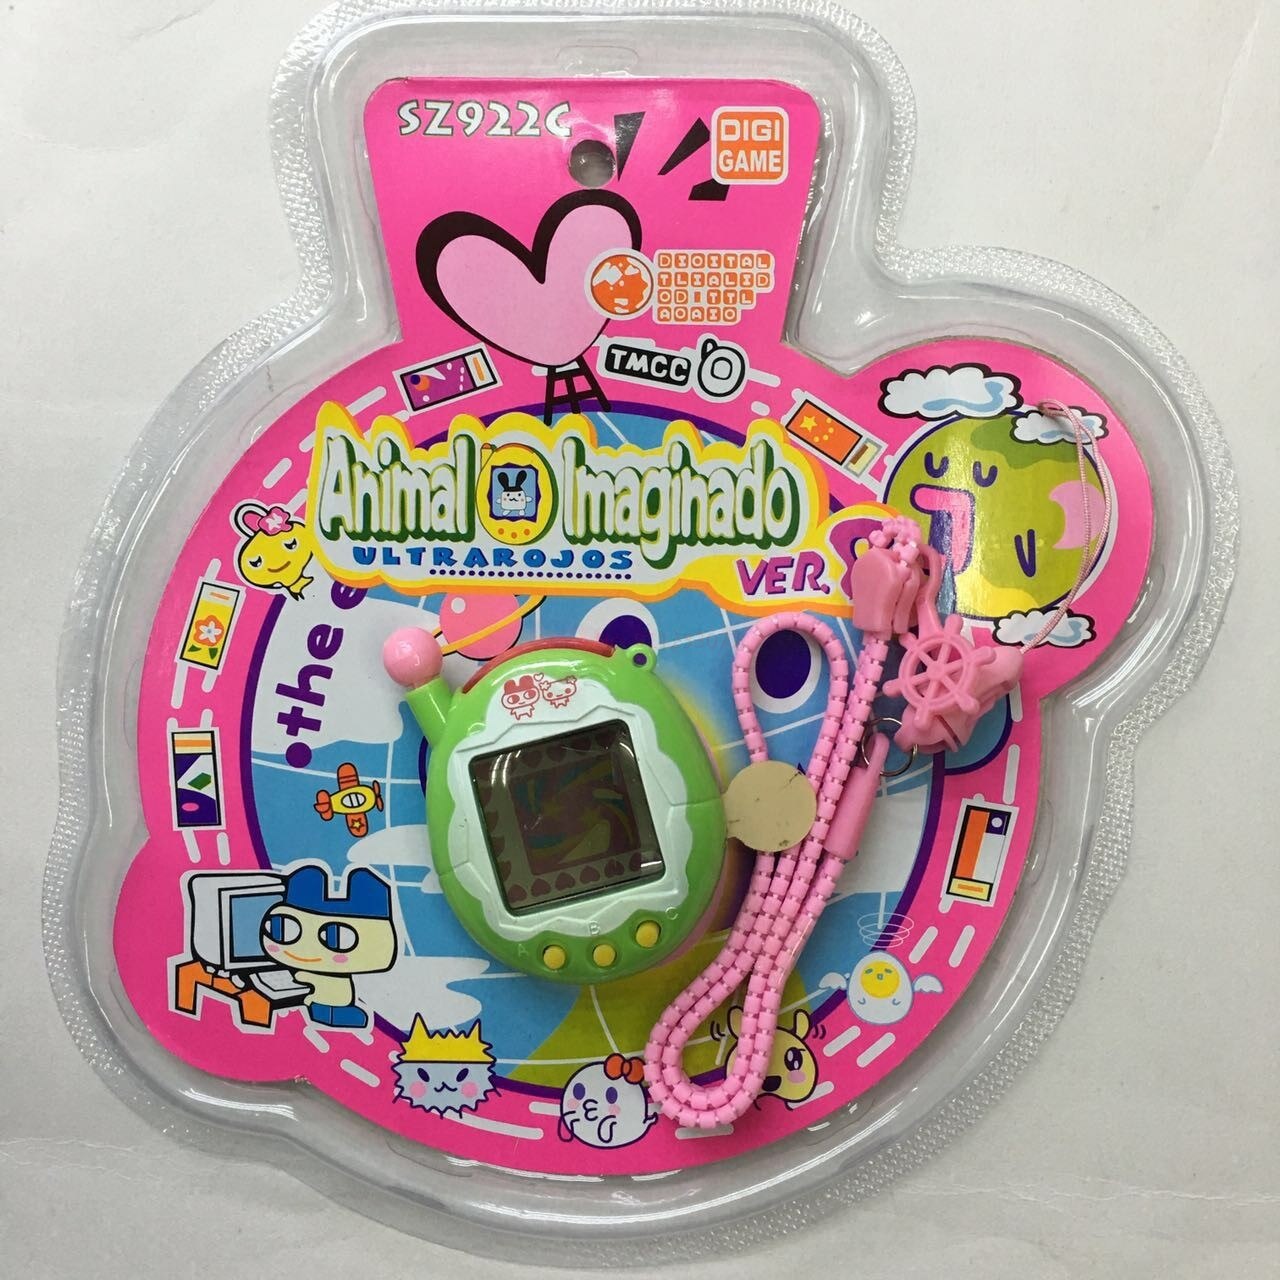 Tamagotchi Original Digital Monster Game Machine Retrogame Play Vidio Handheld Gaming Portable Mini Video Greymon Game 1 - Original Tamagotchi